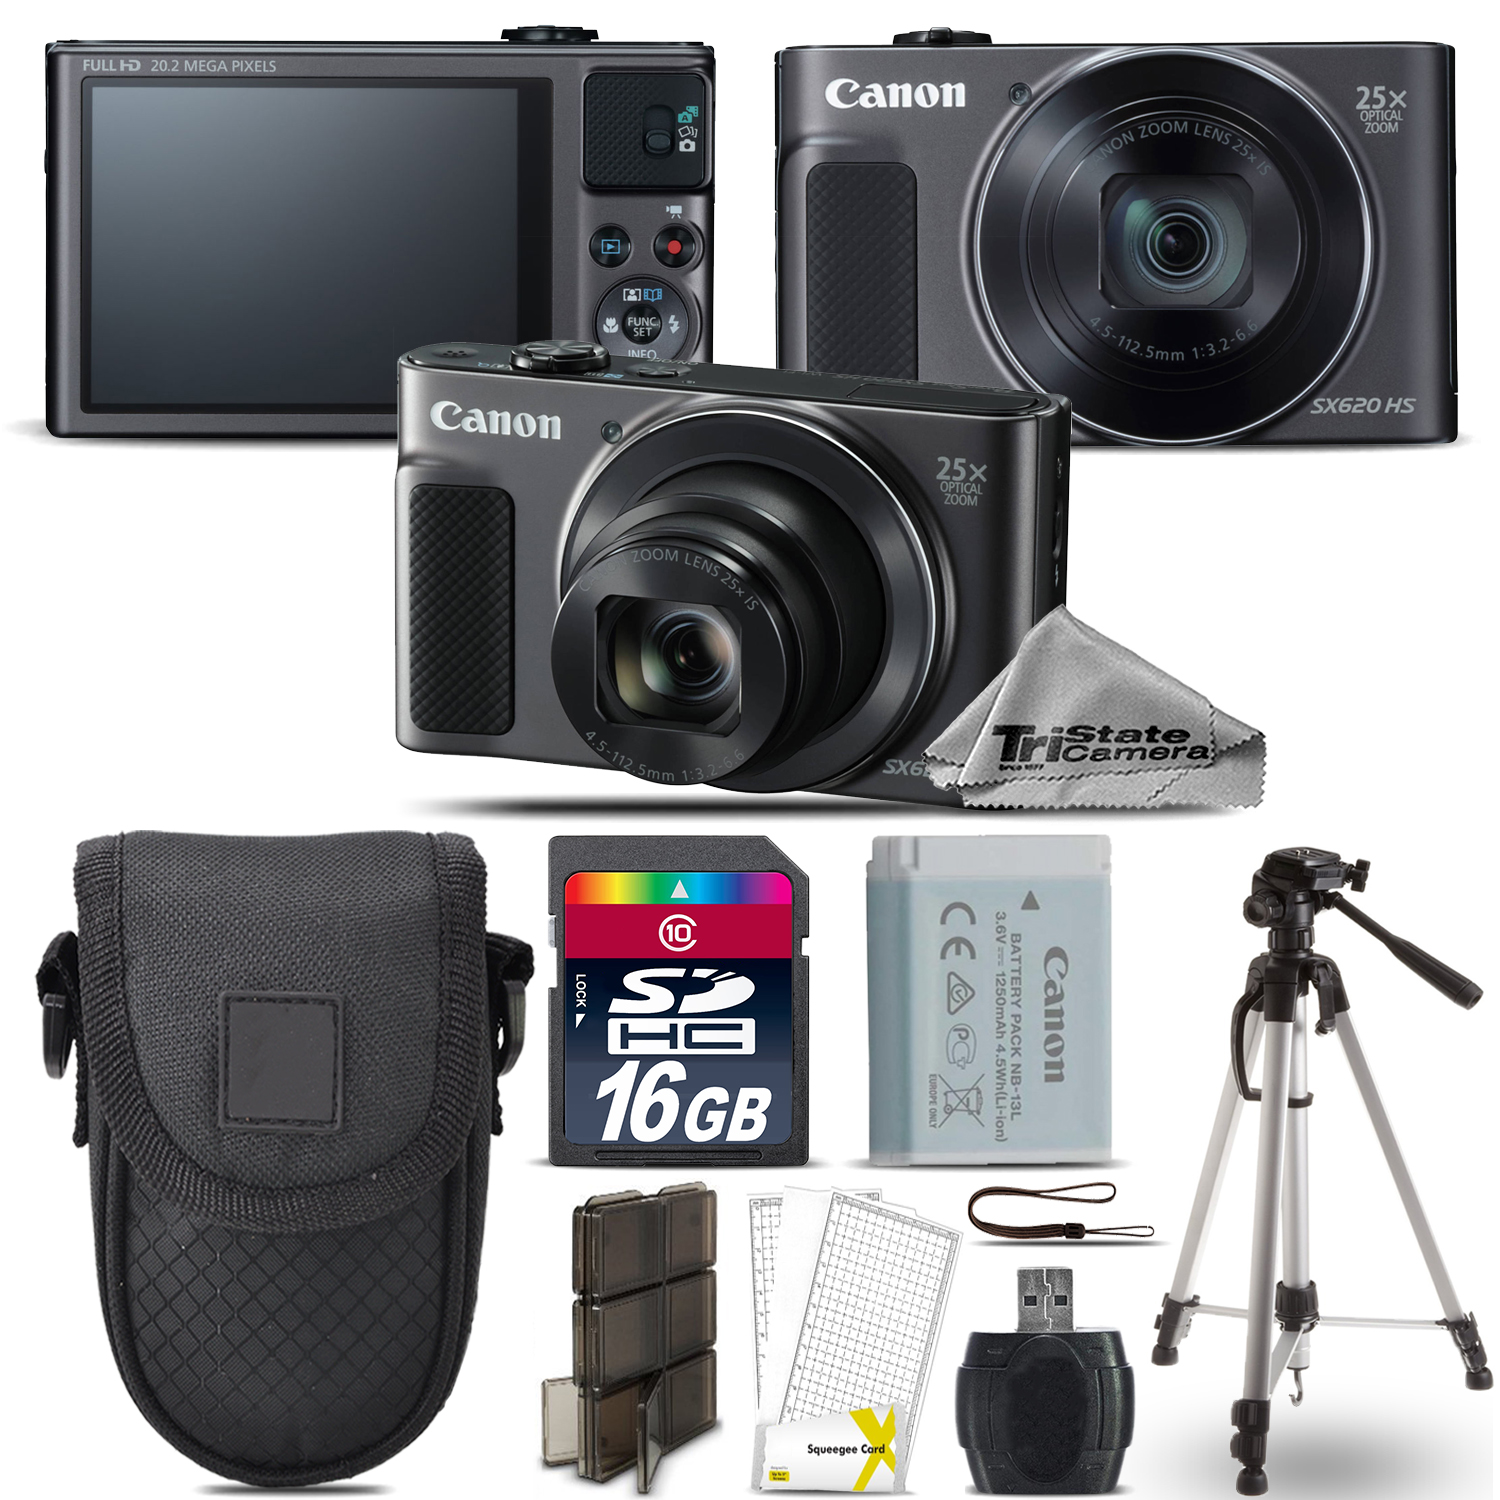 PowerShot SX620 HS Point & Shoot (Black) Camera +Tripod + Case - 16GB Kit *FREE SHIPPING*